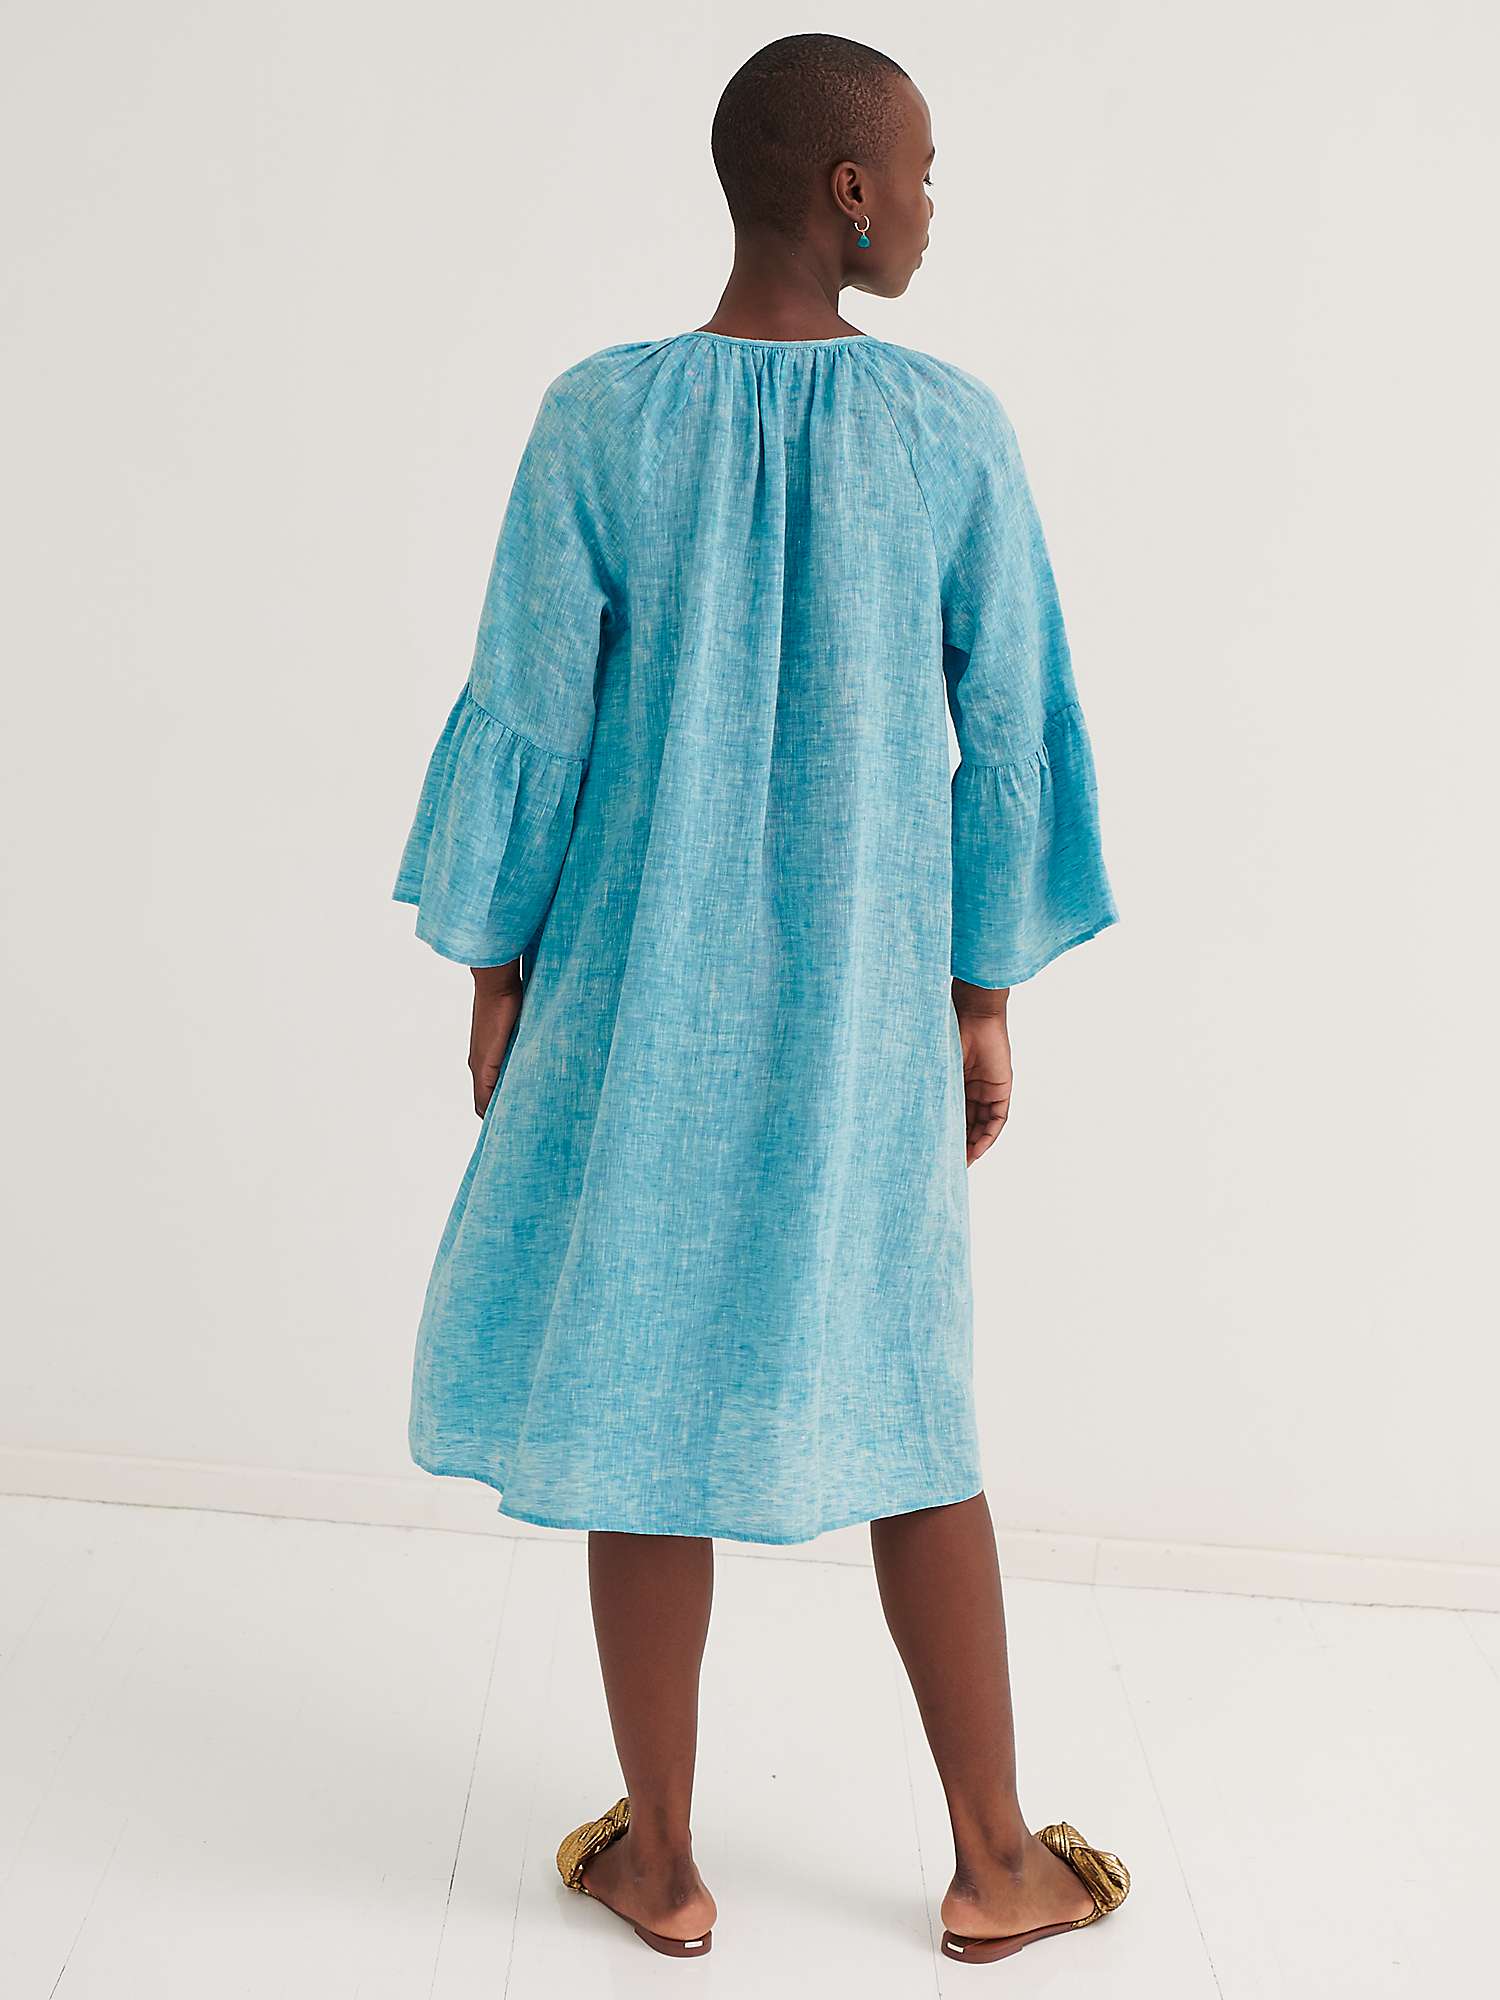 Buy NRBY Elizabeth Linen Tunic Dress Online at johnlewis.com